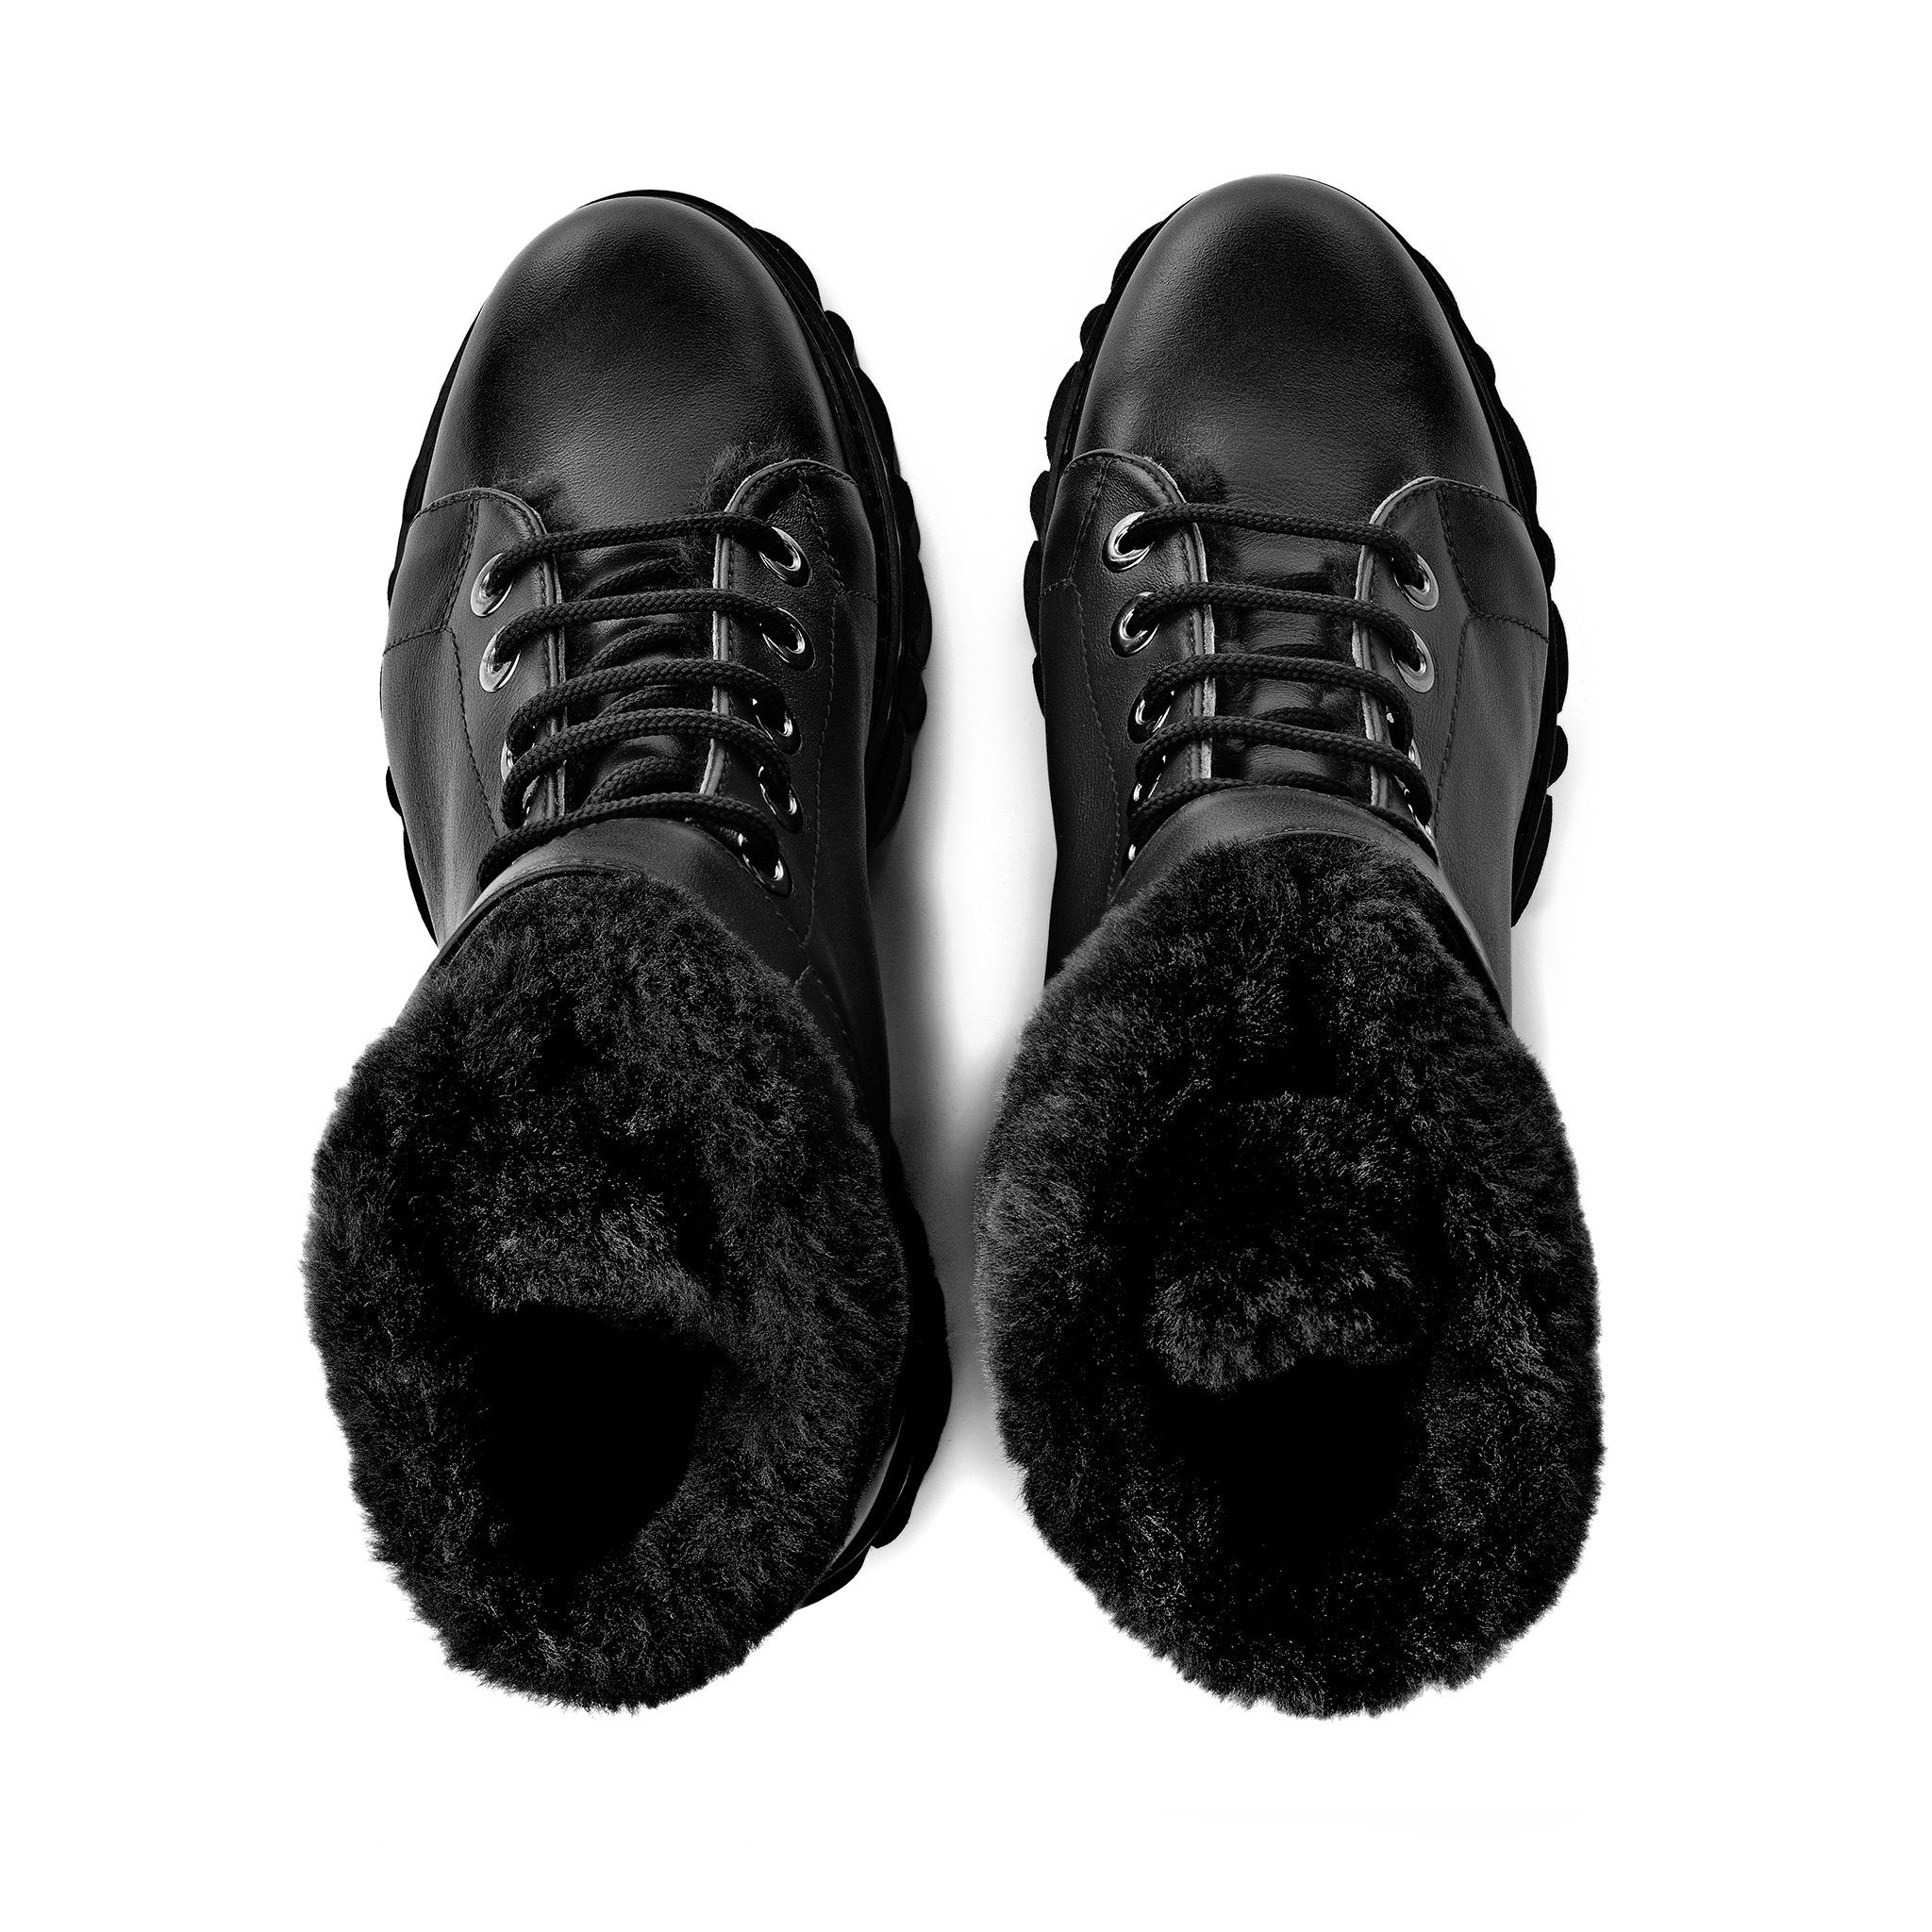 Takara Black Winter Ankle Boots 2030-01 - 6